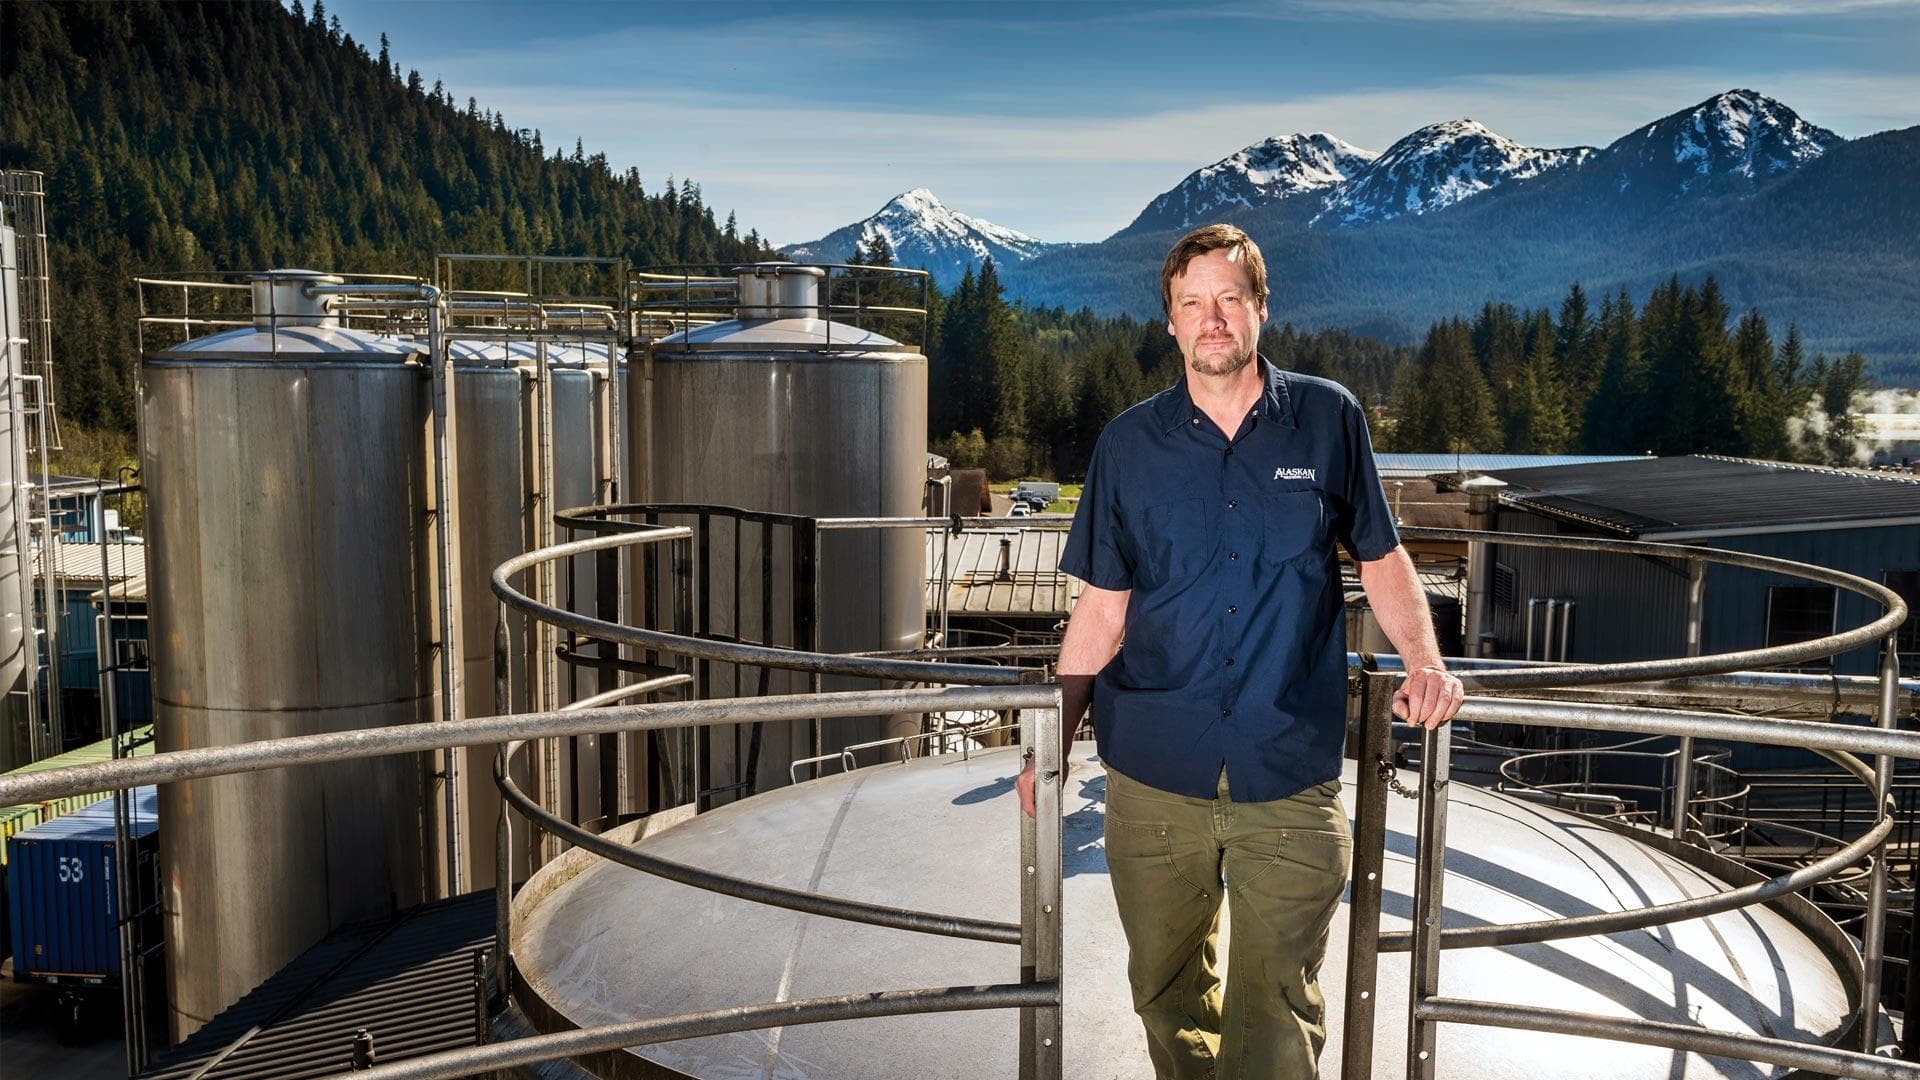 Geoff Larson ’80 stands in front of brewing equipment in Alaska